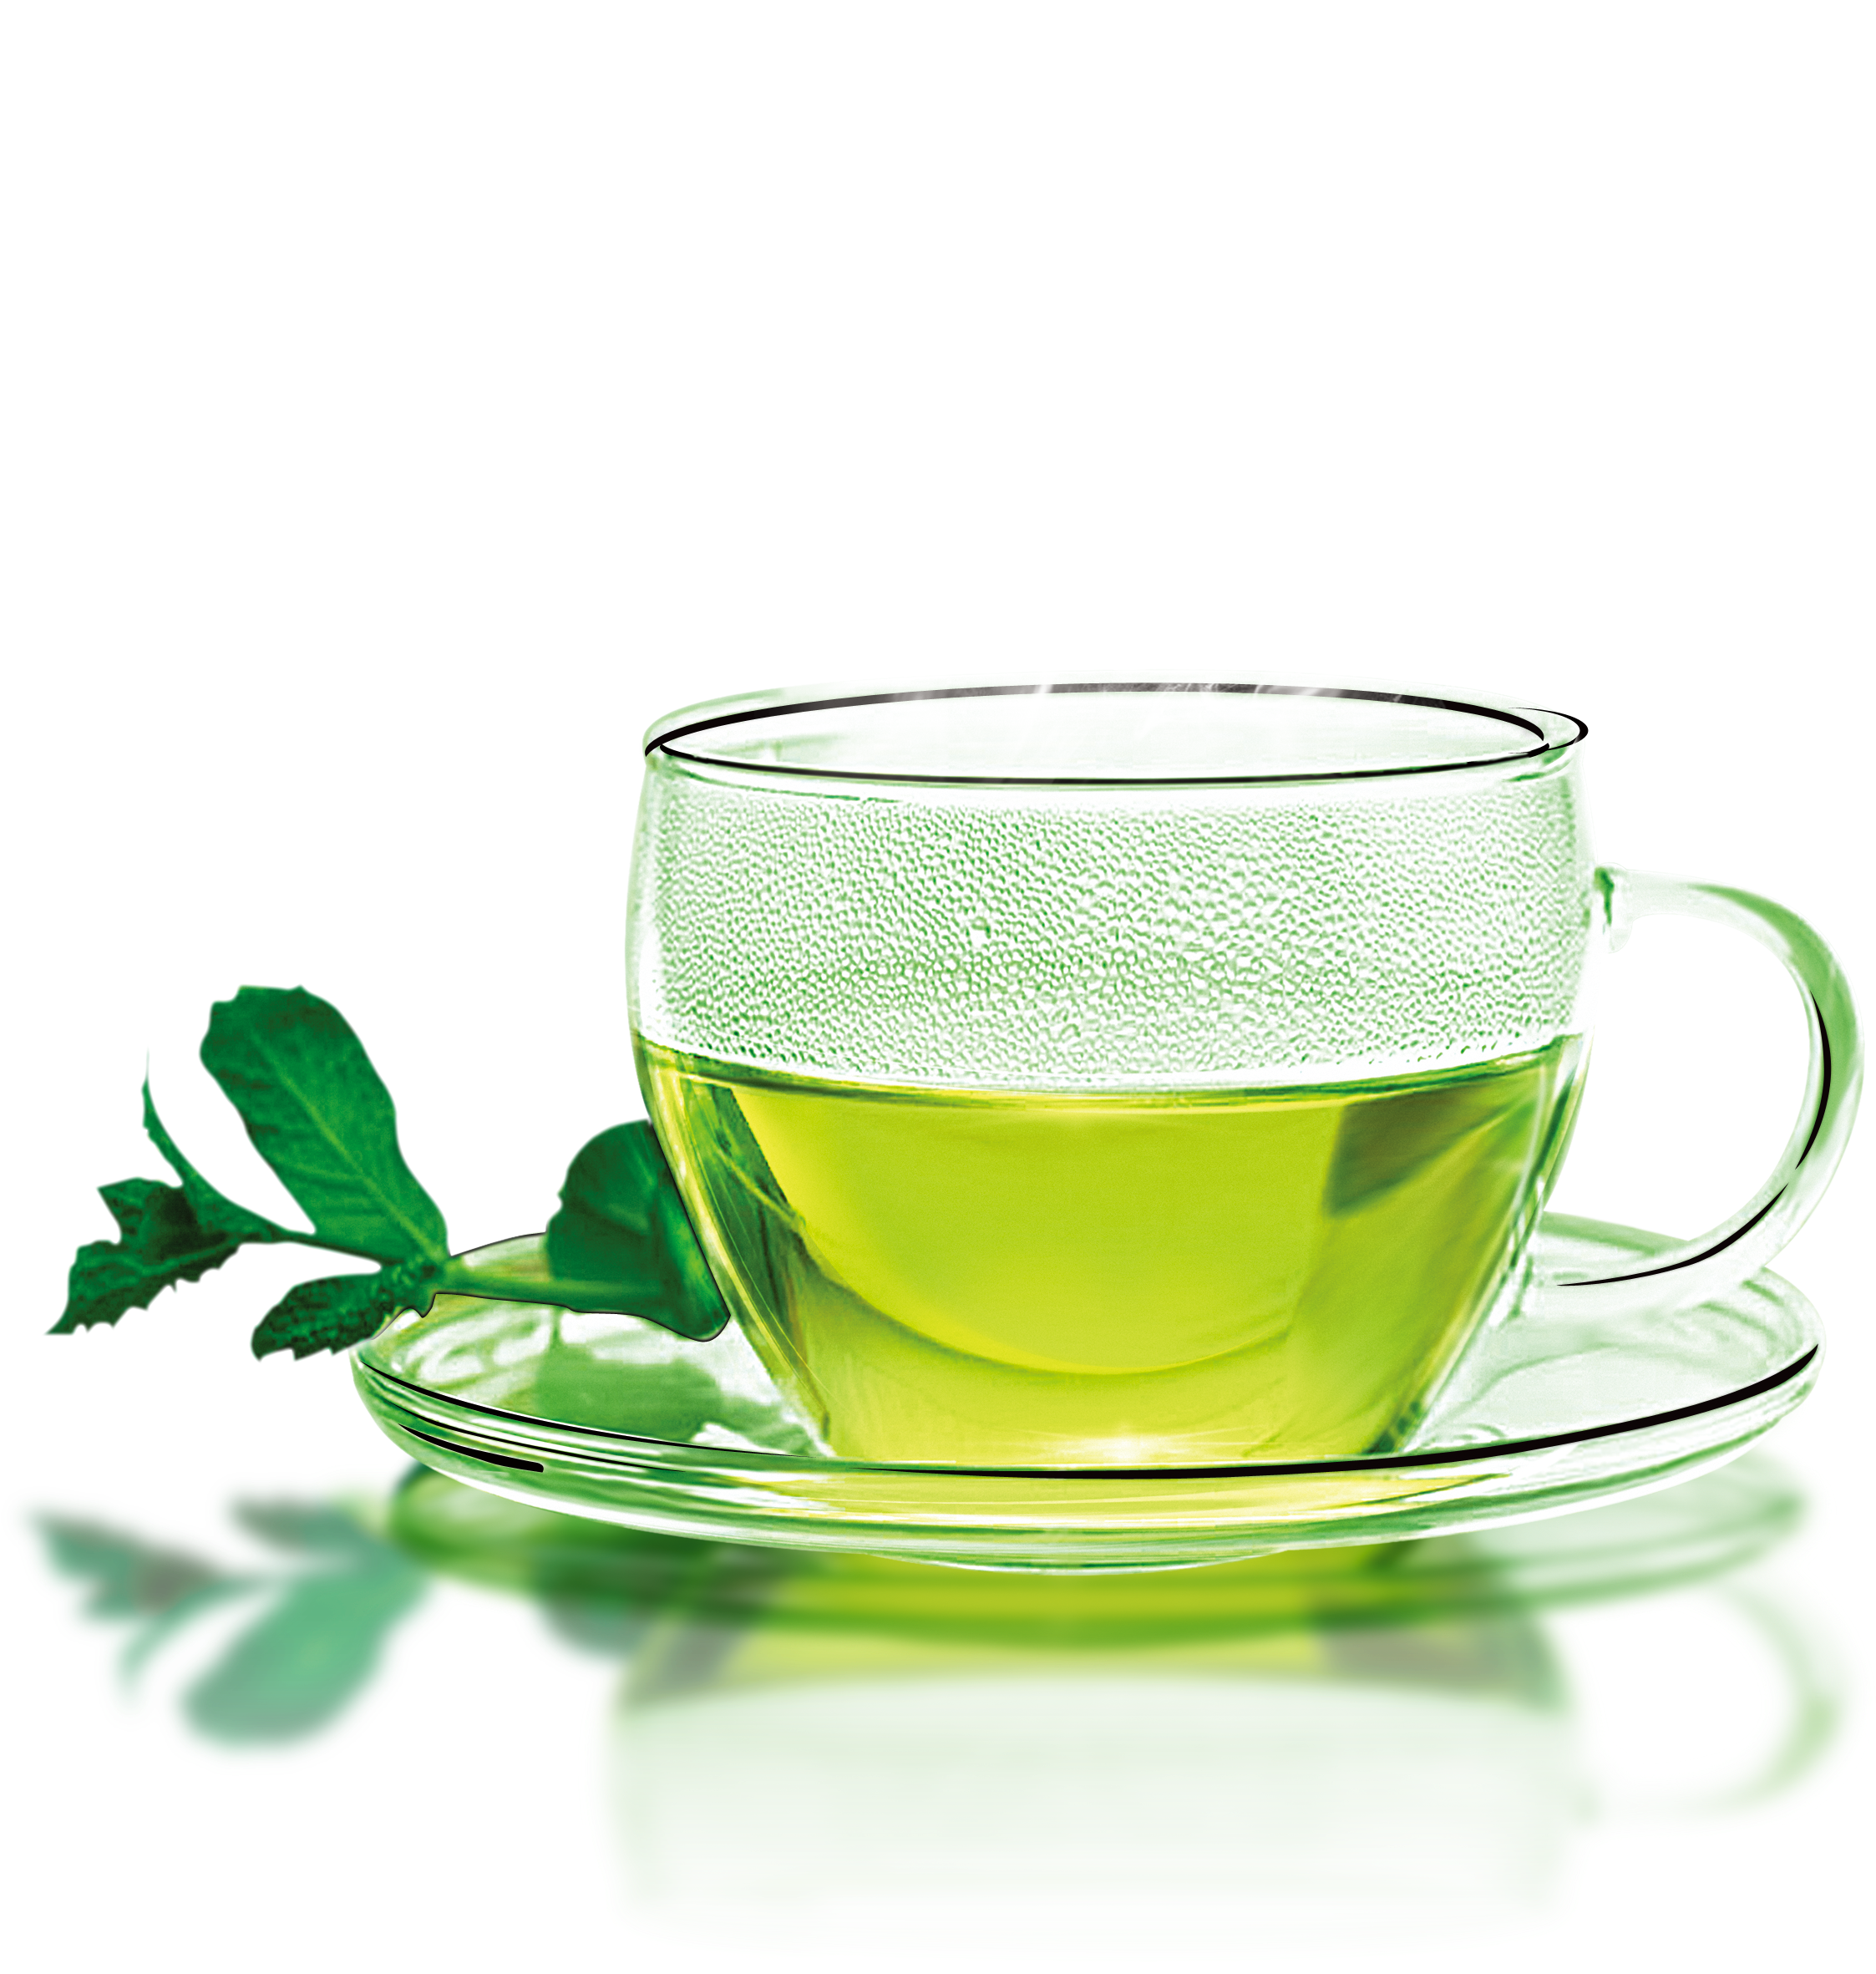 Green Tea Coffee Longjing Tea Teacup - Clear Cup Of Green Tea (2909x2480)